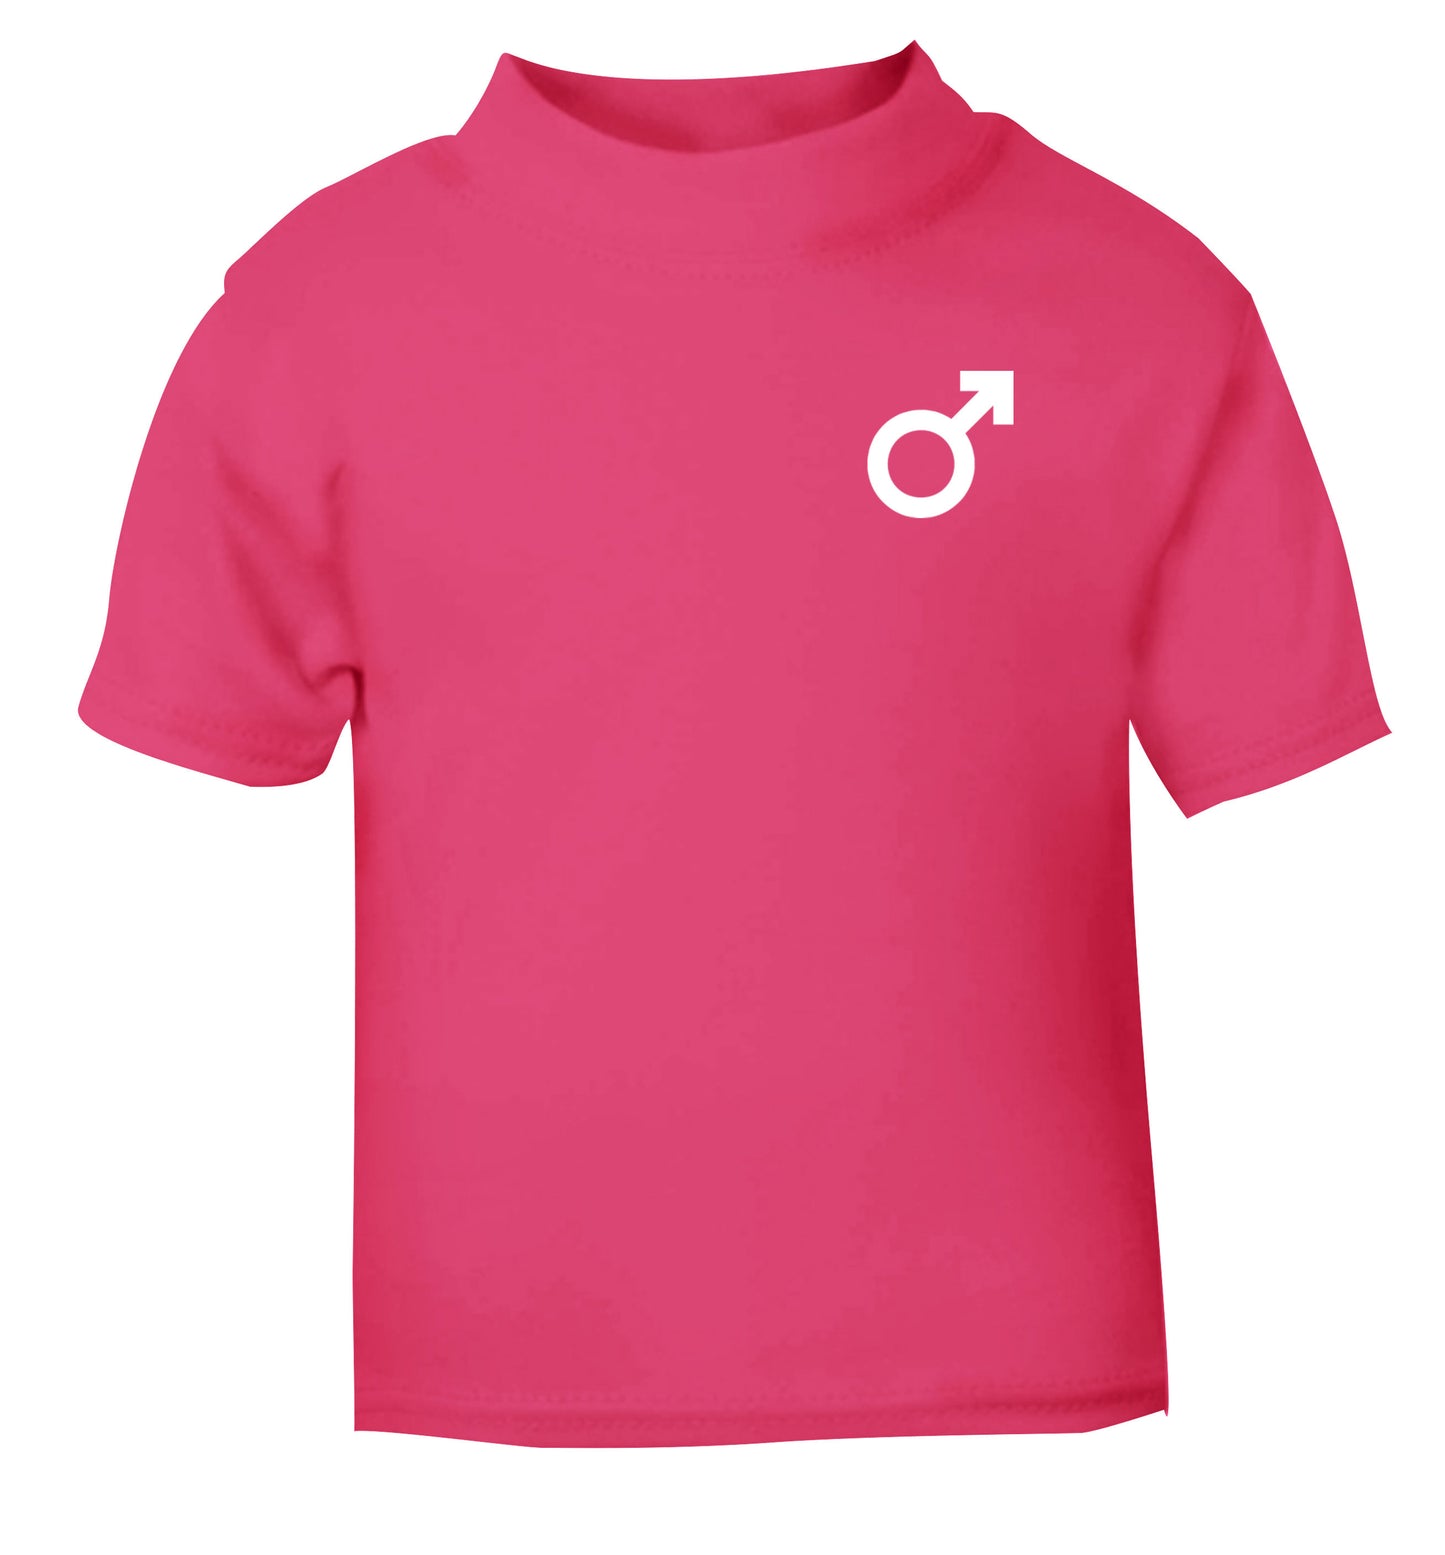 Male symbol pocket pink Baby Toddler Tshirt 2 Years